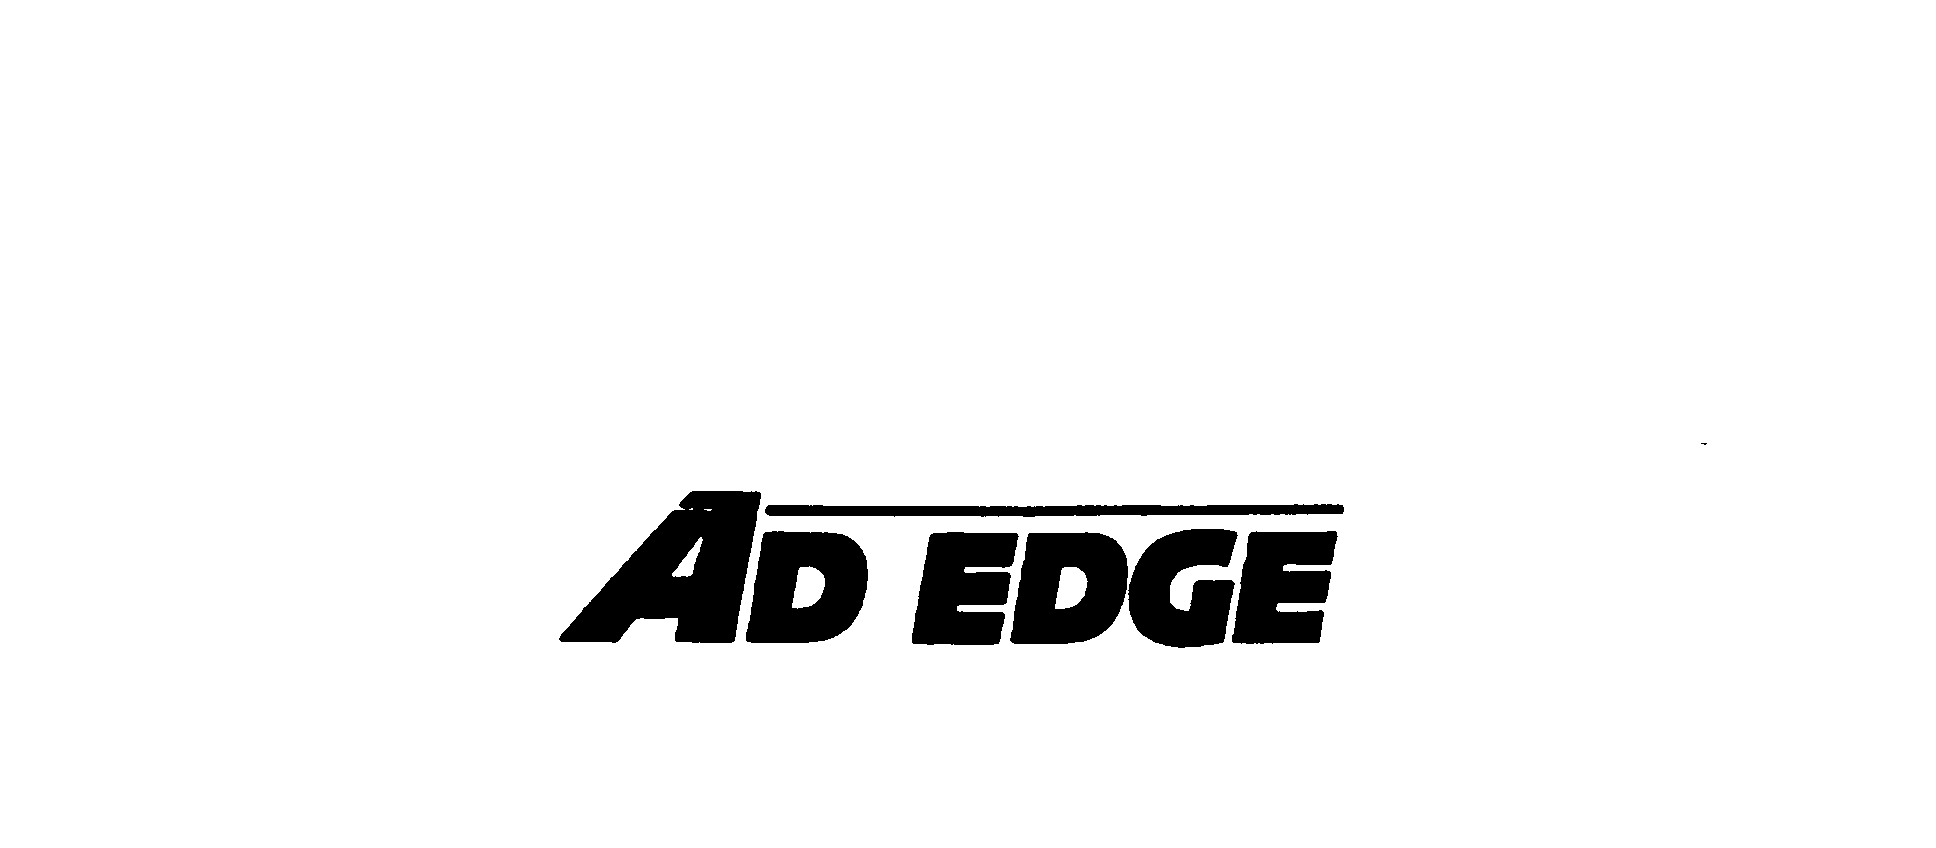  AD EDGE